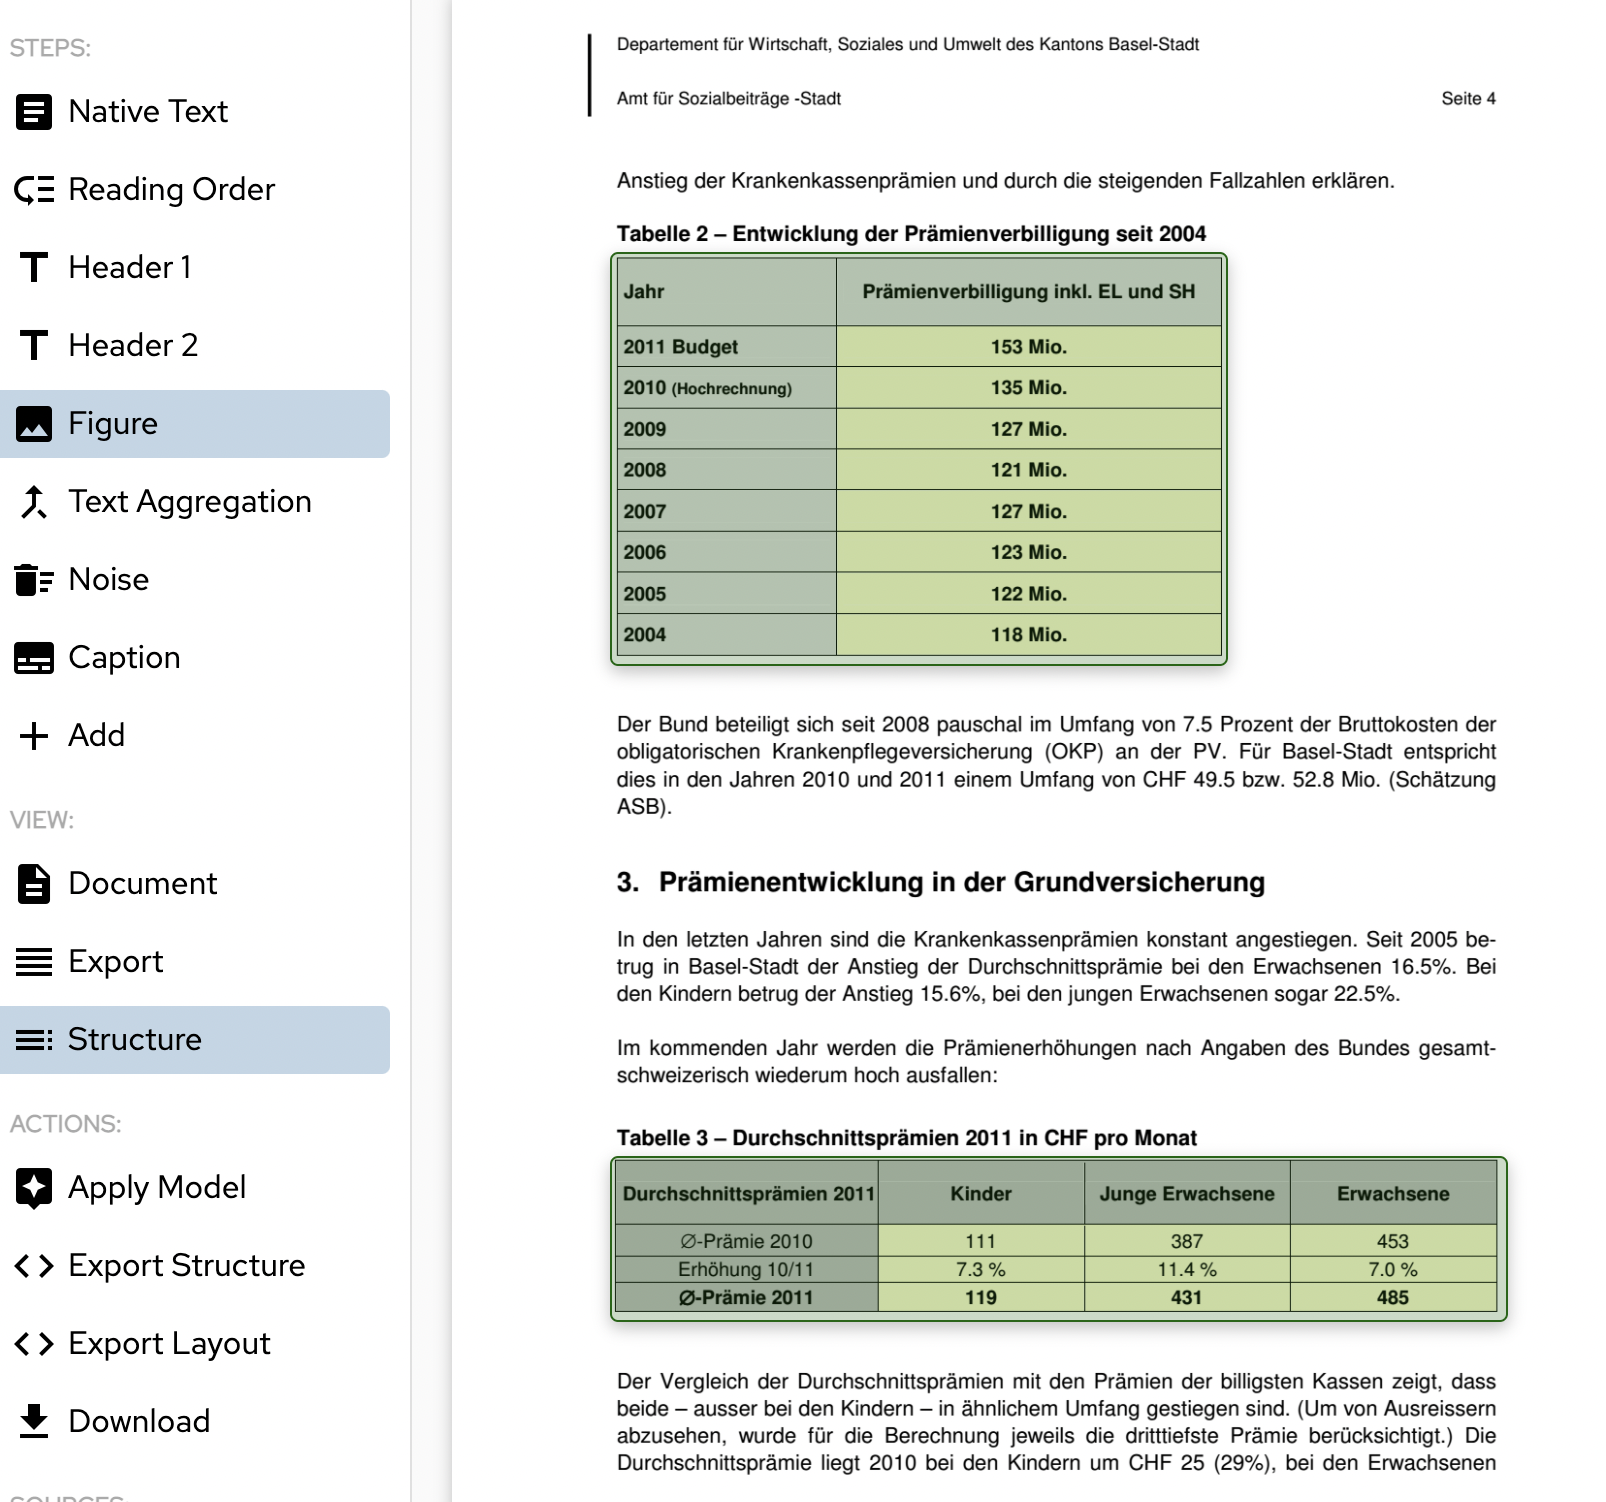 Extracting figures in PDF document